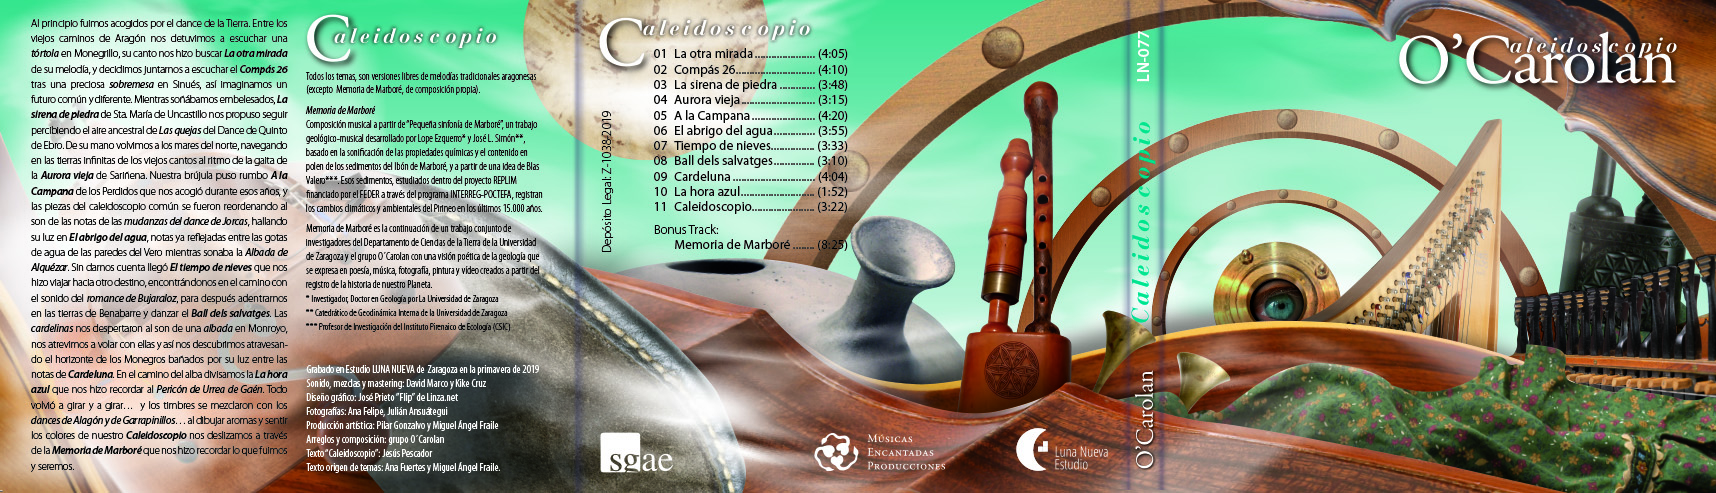 Diseño completo del disco "Caleidoscopio"